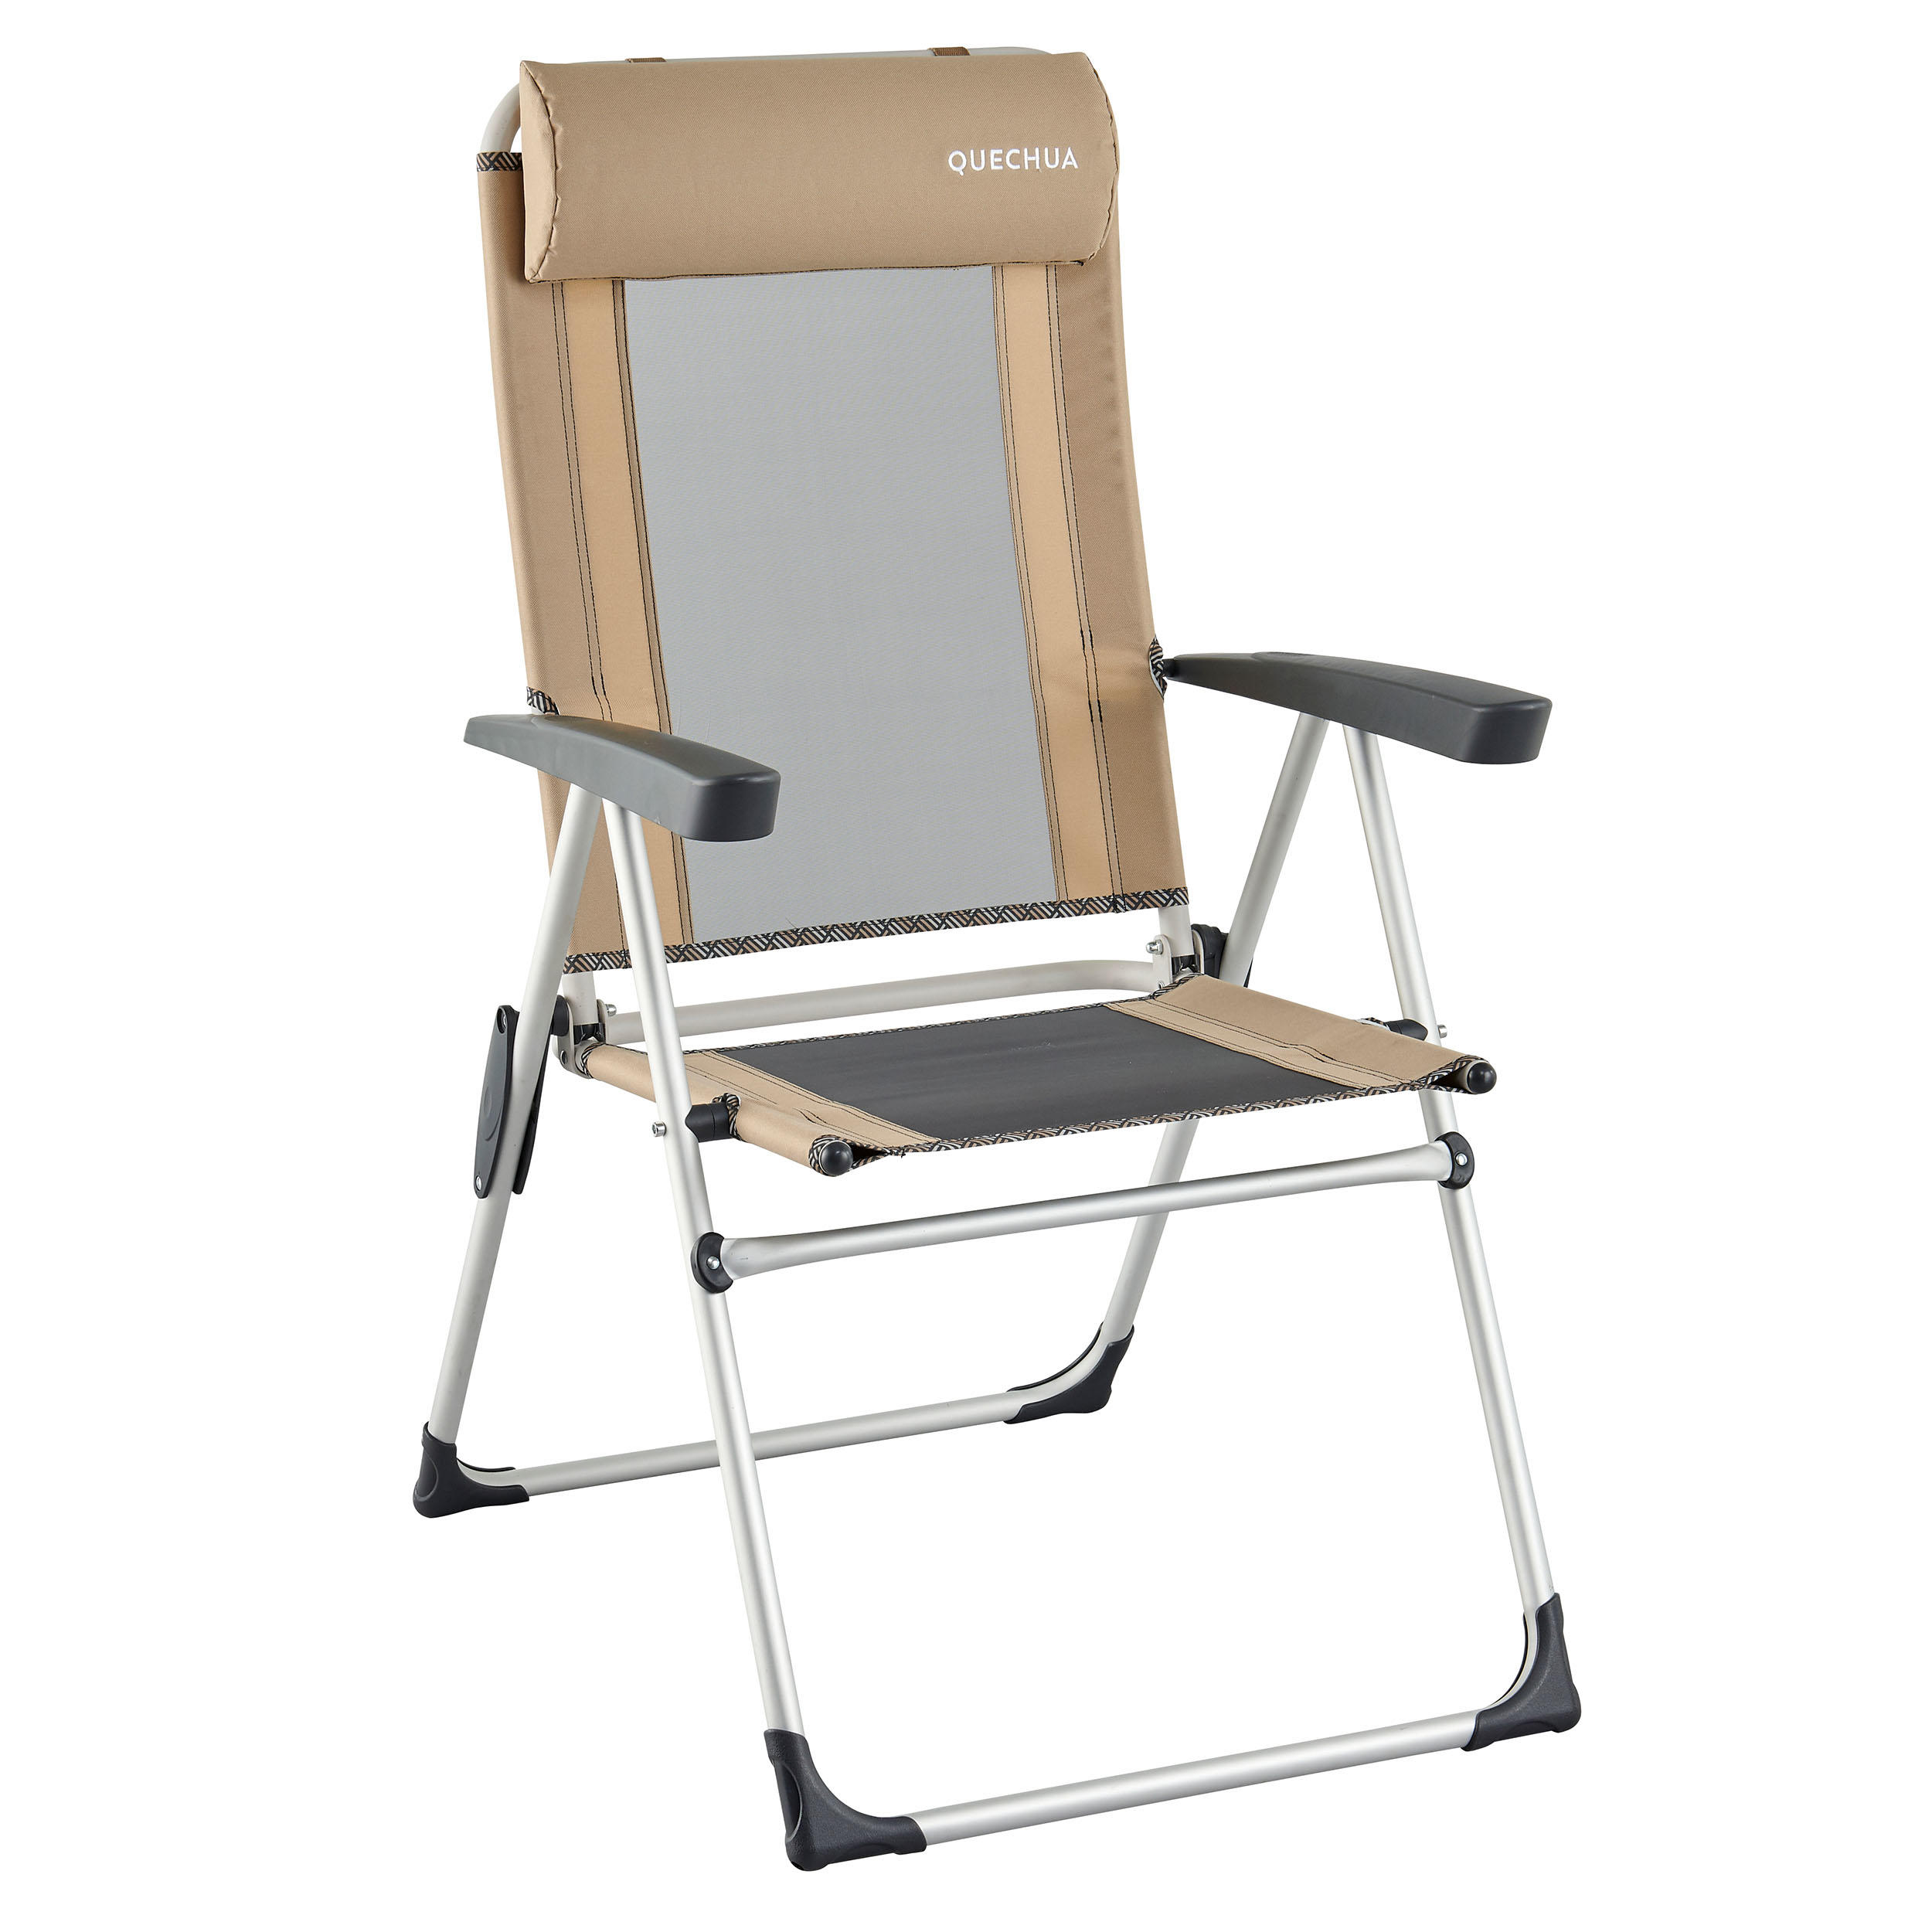 Decathlon Recliner Camping Chair